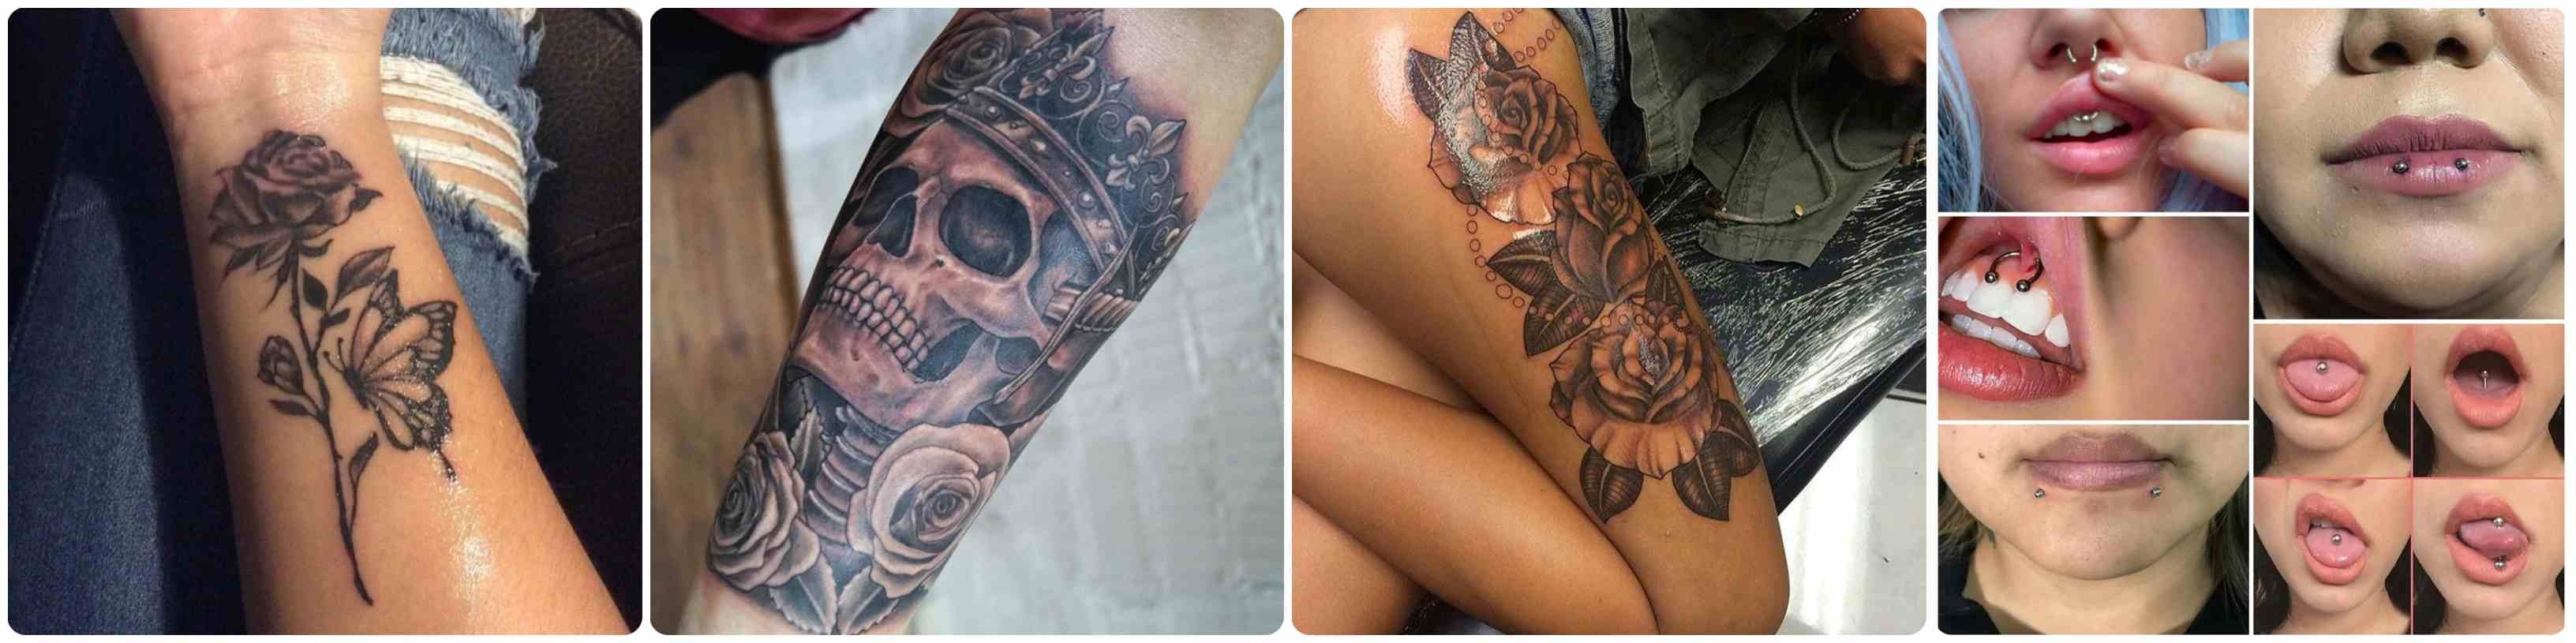 tatuaje piercing roman